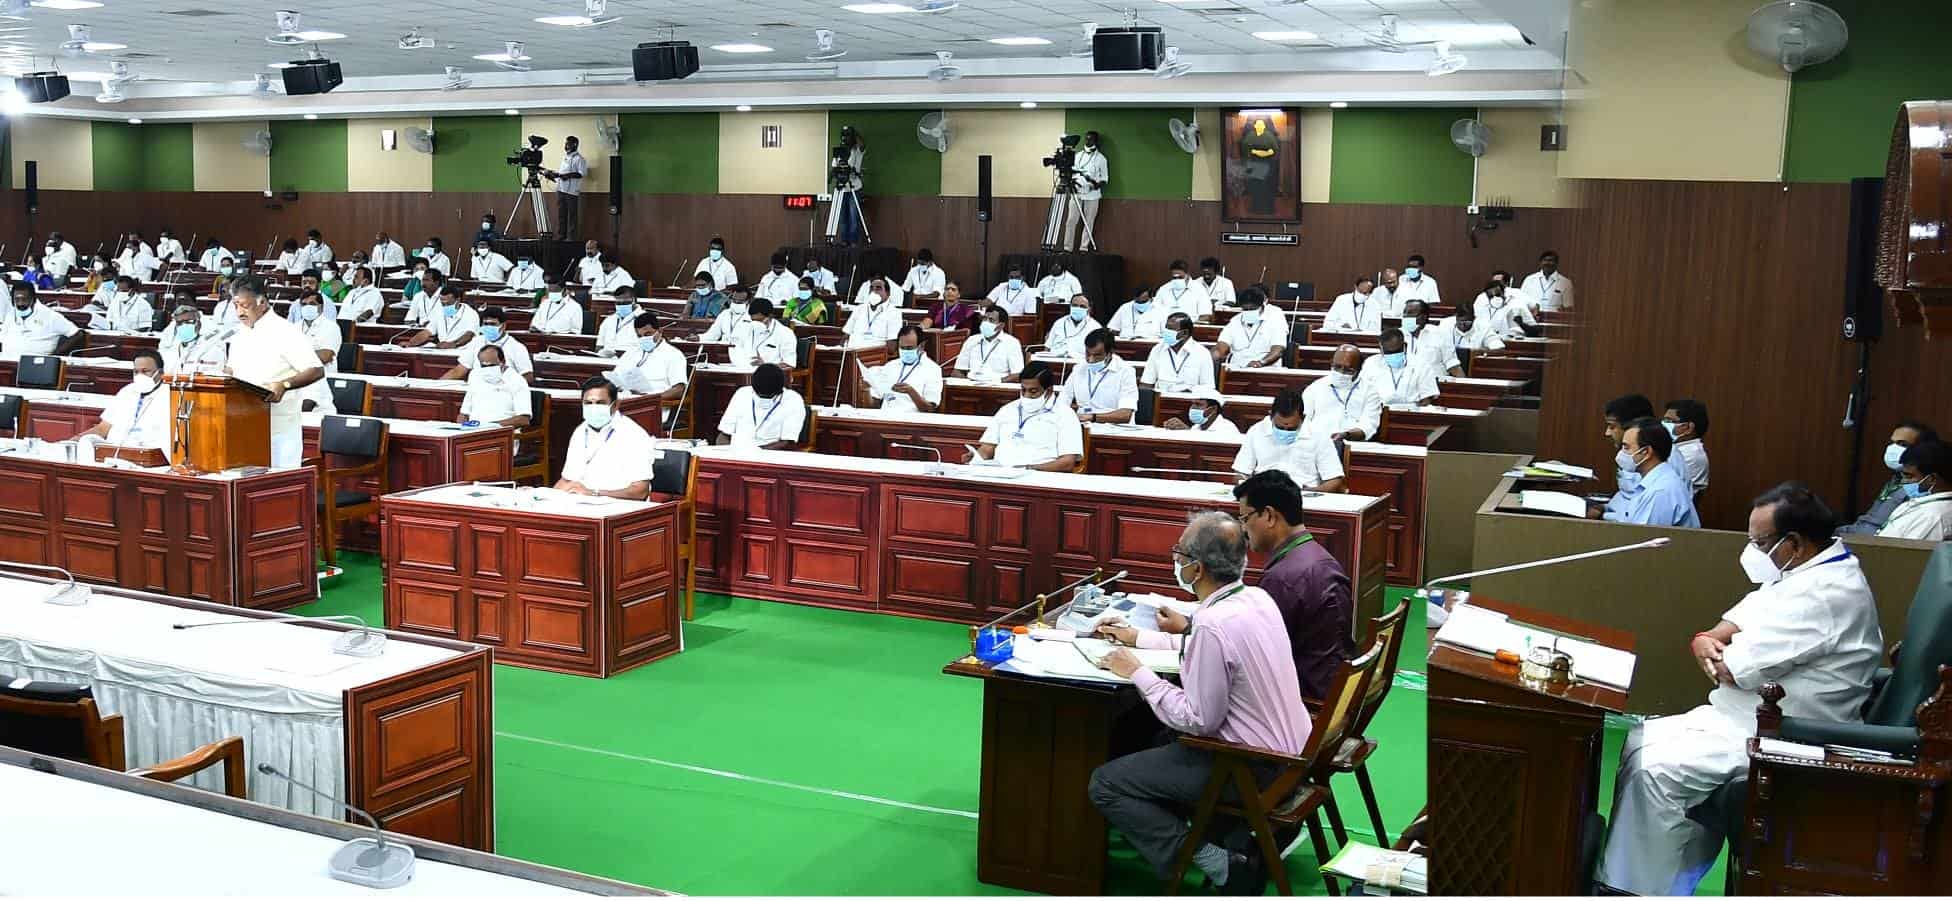 Jayalalitha Photo placed in Kalaivanar Arangam, where assembly session